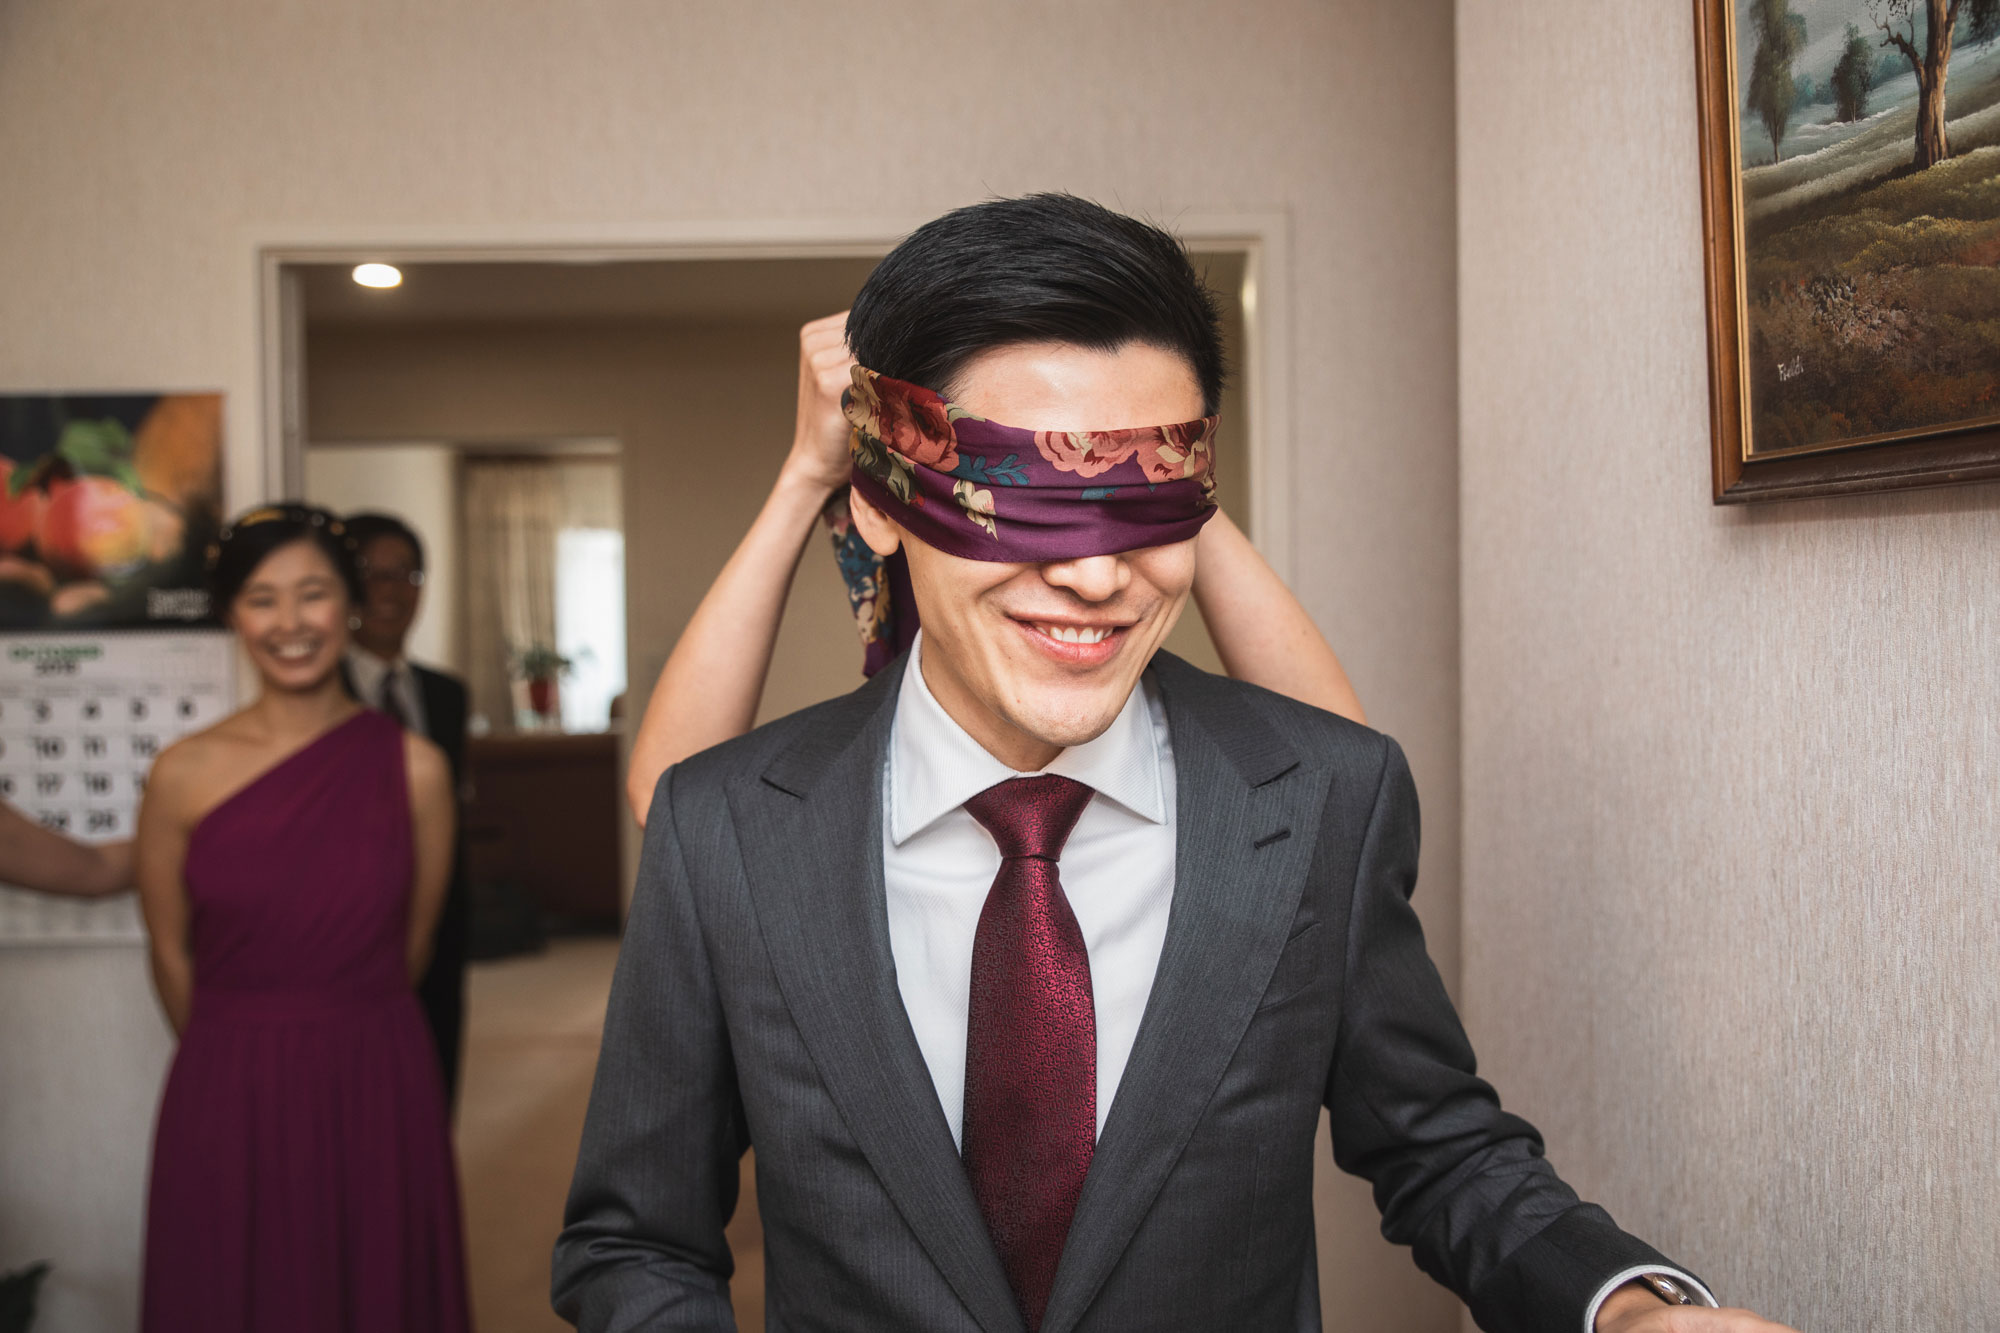 auckland wedding groom blindfolded